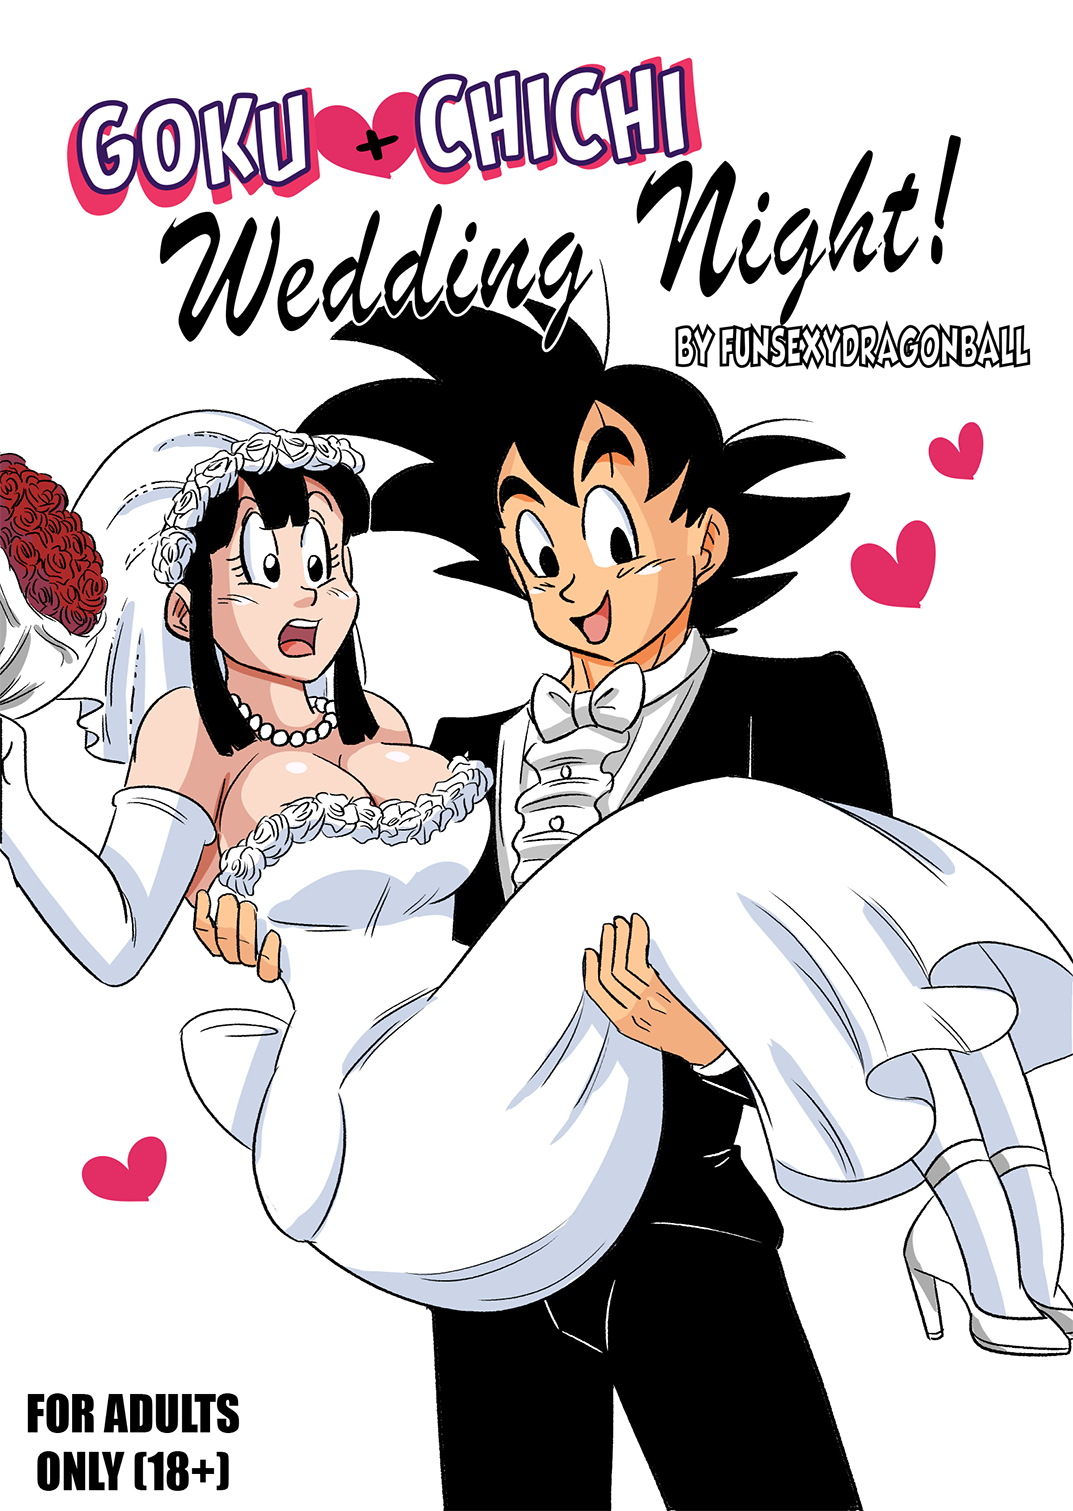 Funsexydragonball Wedding Night Dragon Ball Ongoing Porn Comics